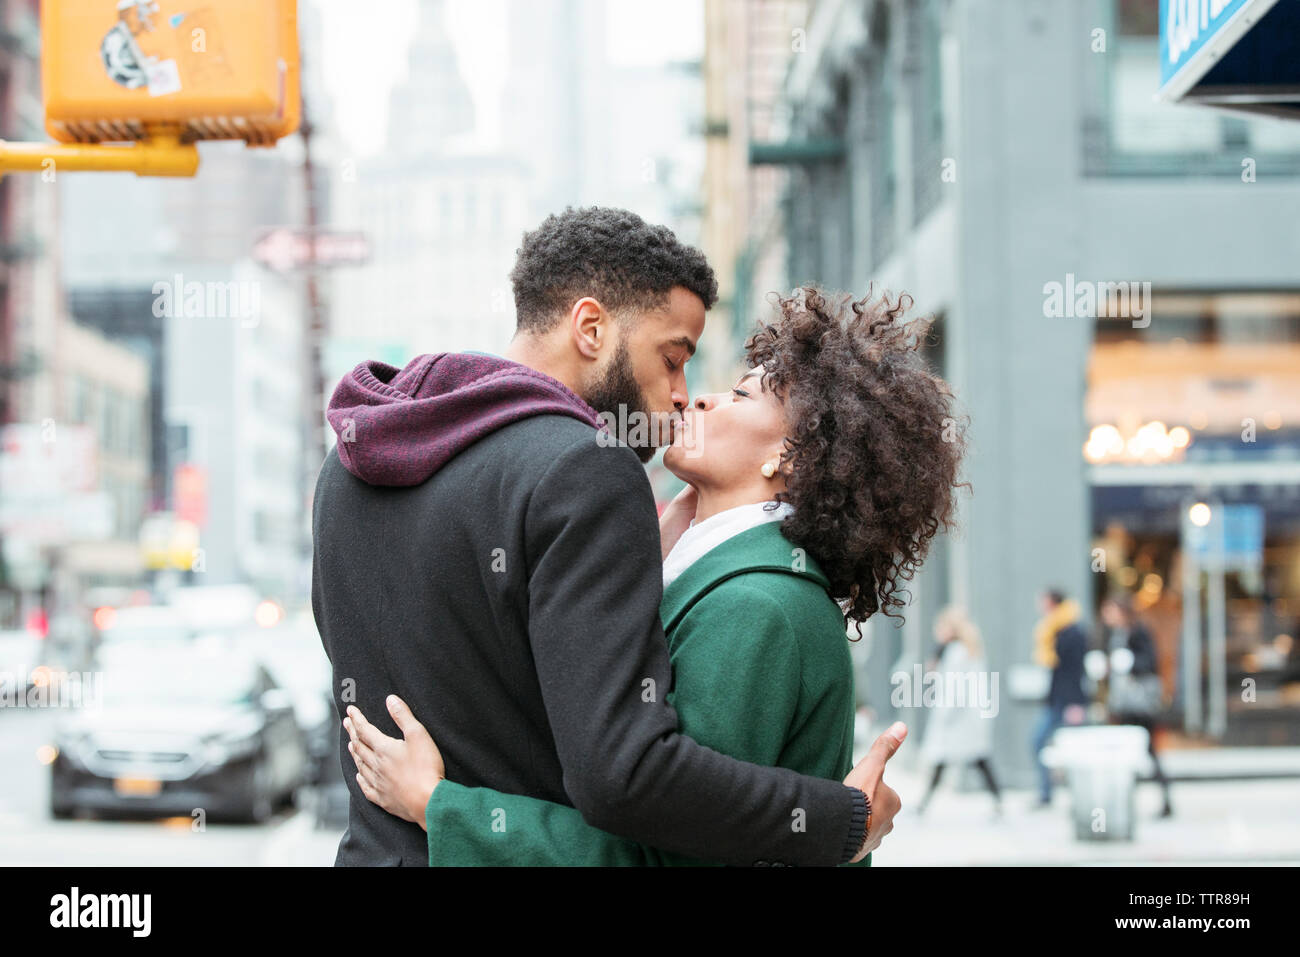 Couple kissing on city street Stock Photo